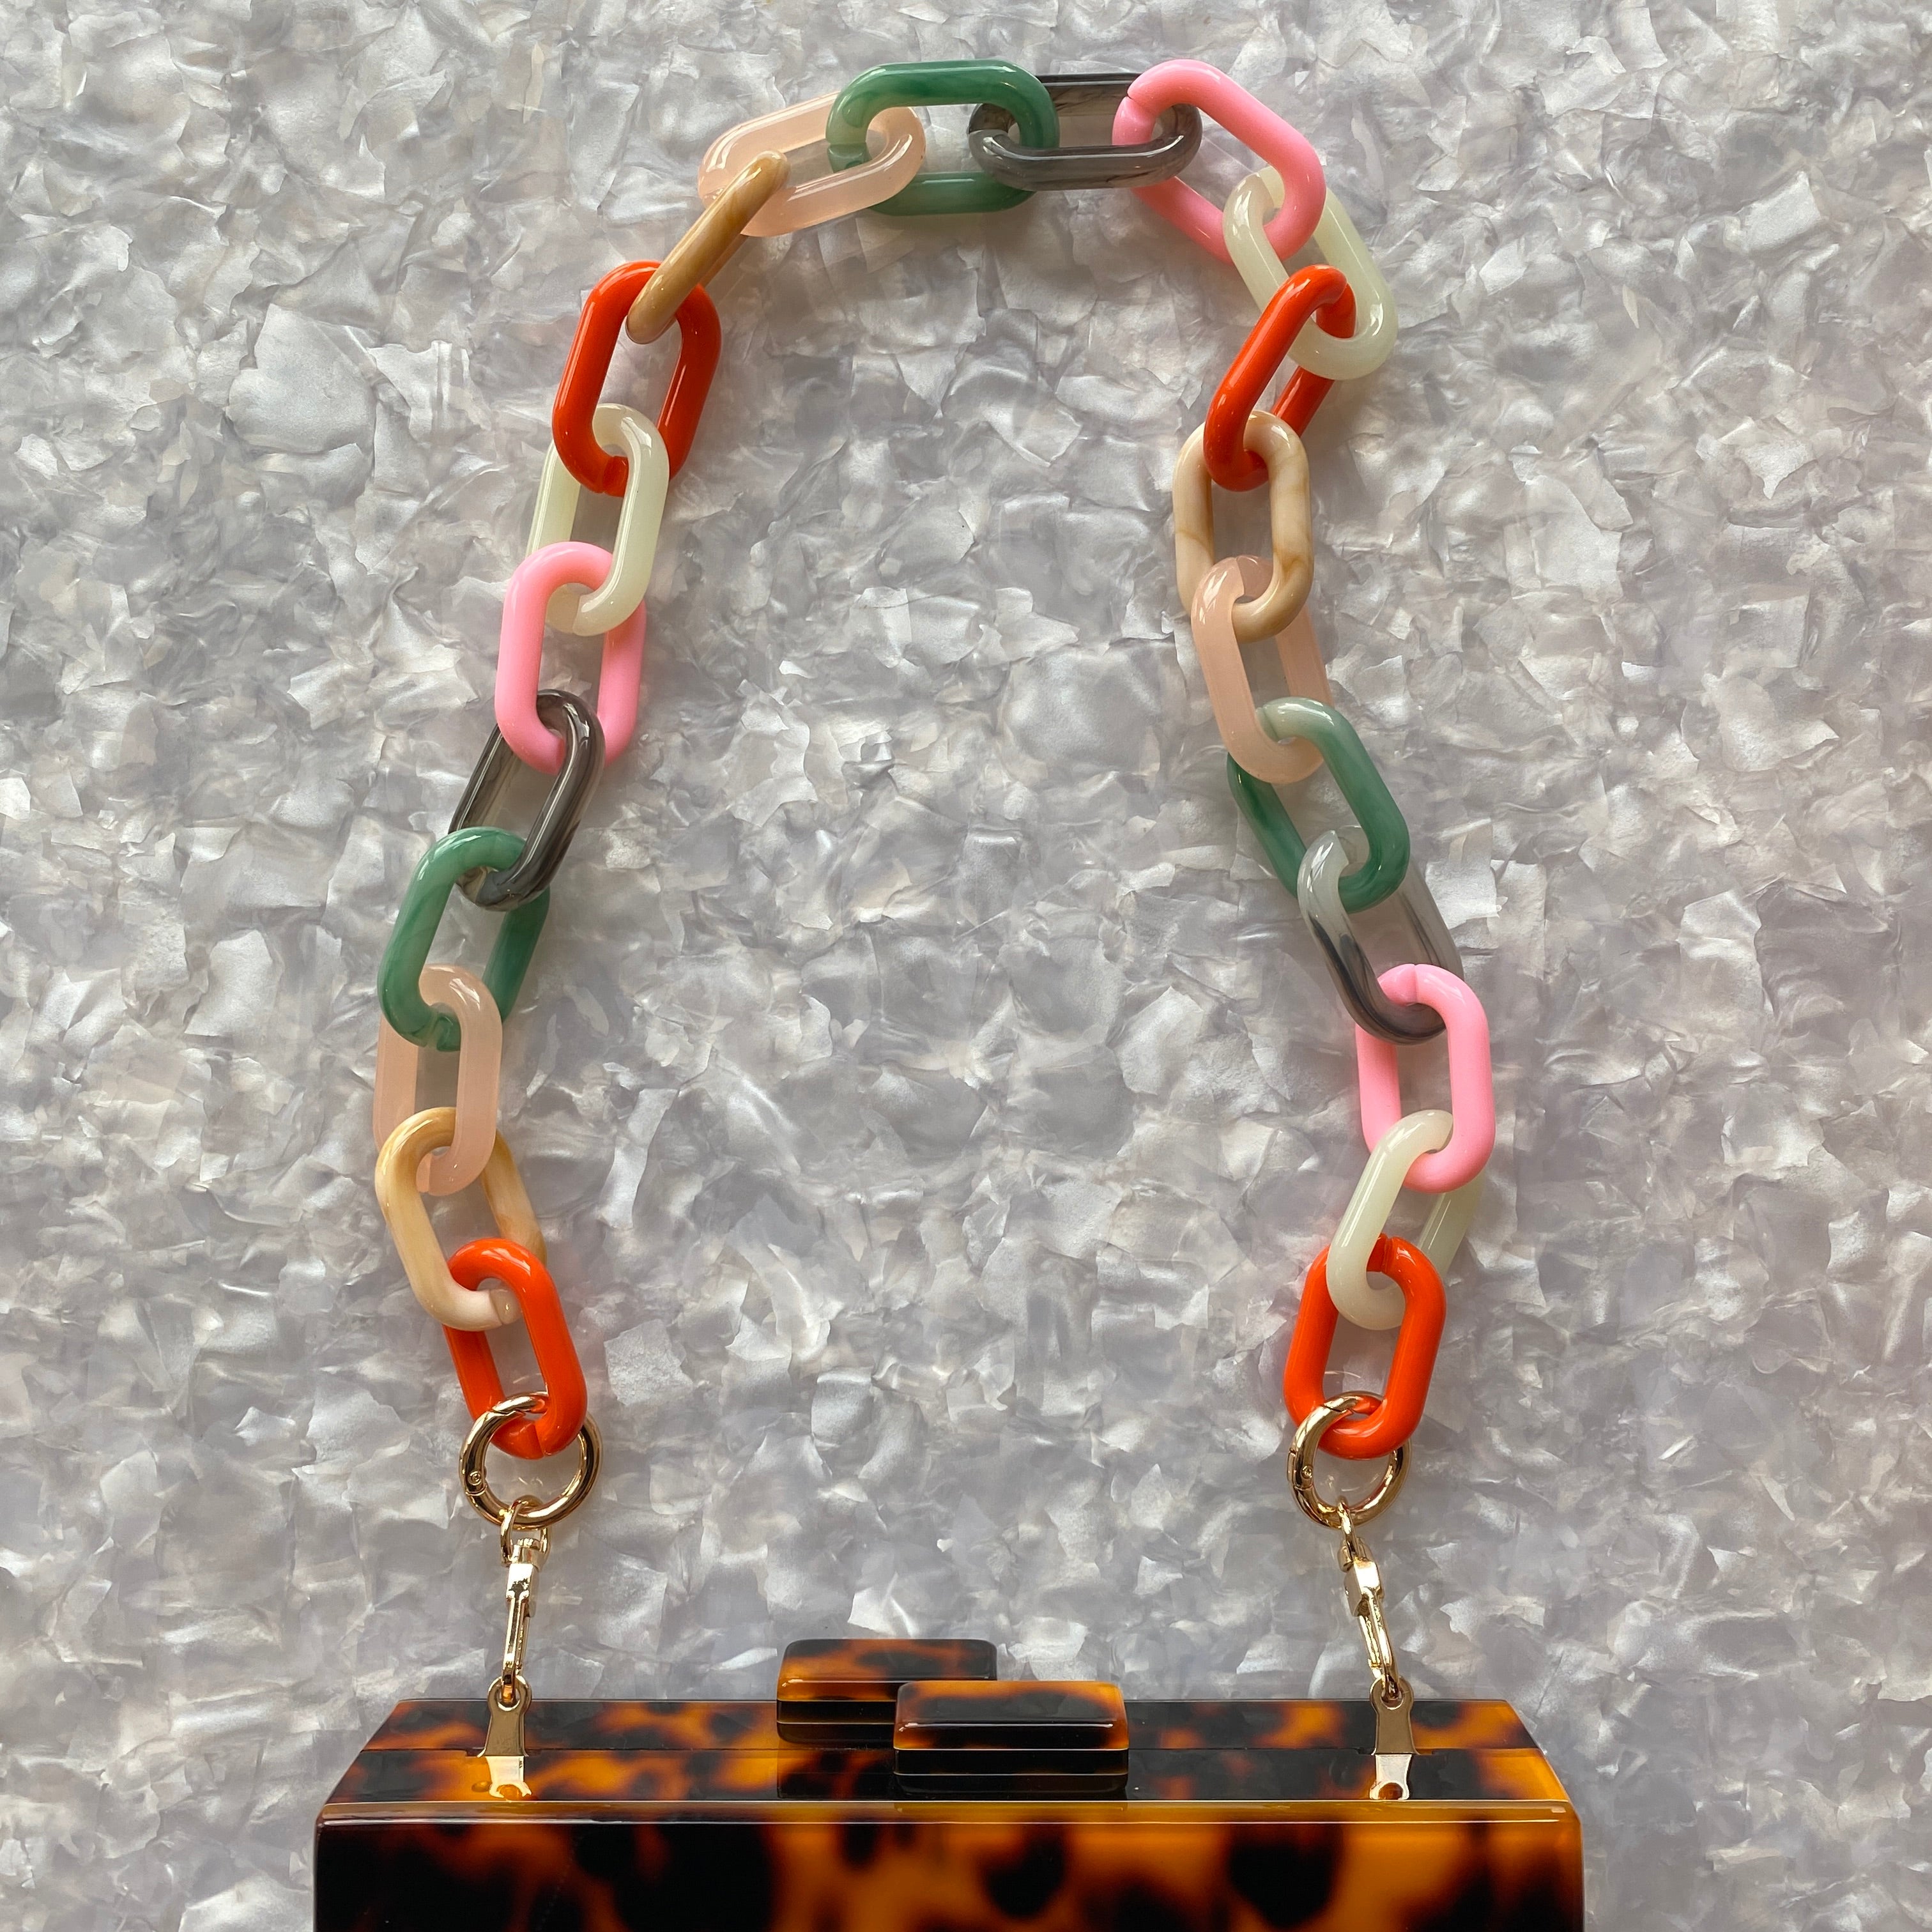 (Clip-Short) Decorative Chain Strap : Color Option